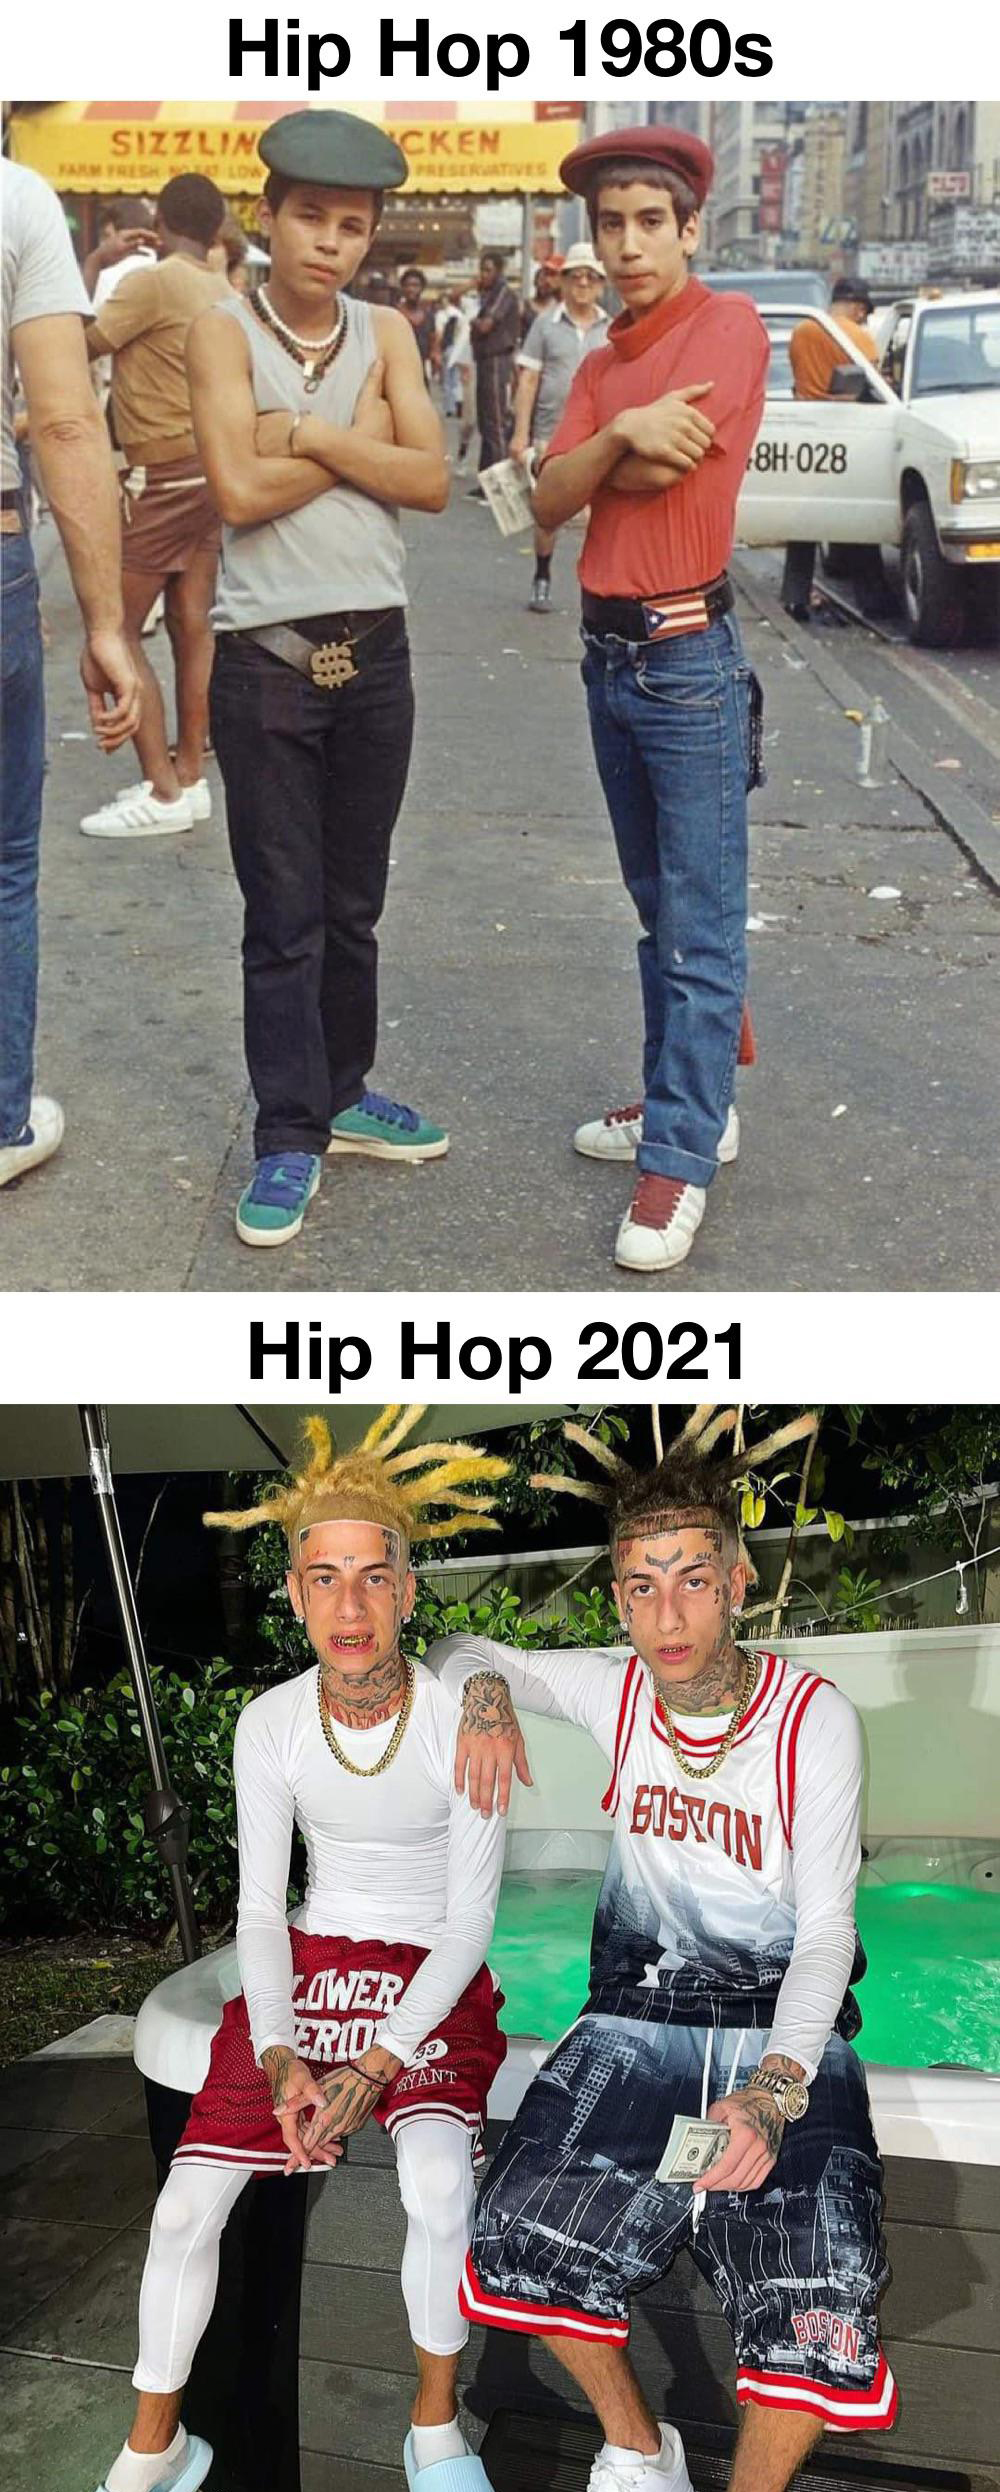 jeans - Hip Hop 1980s Siltung A028 Hip Hop 2021 En Zower Brid